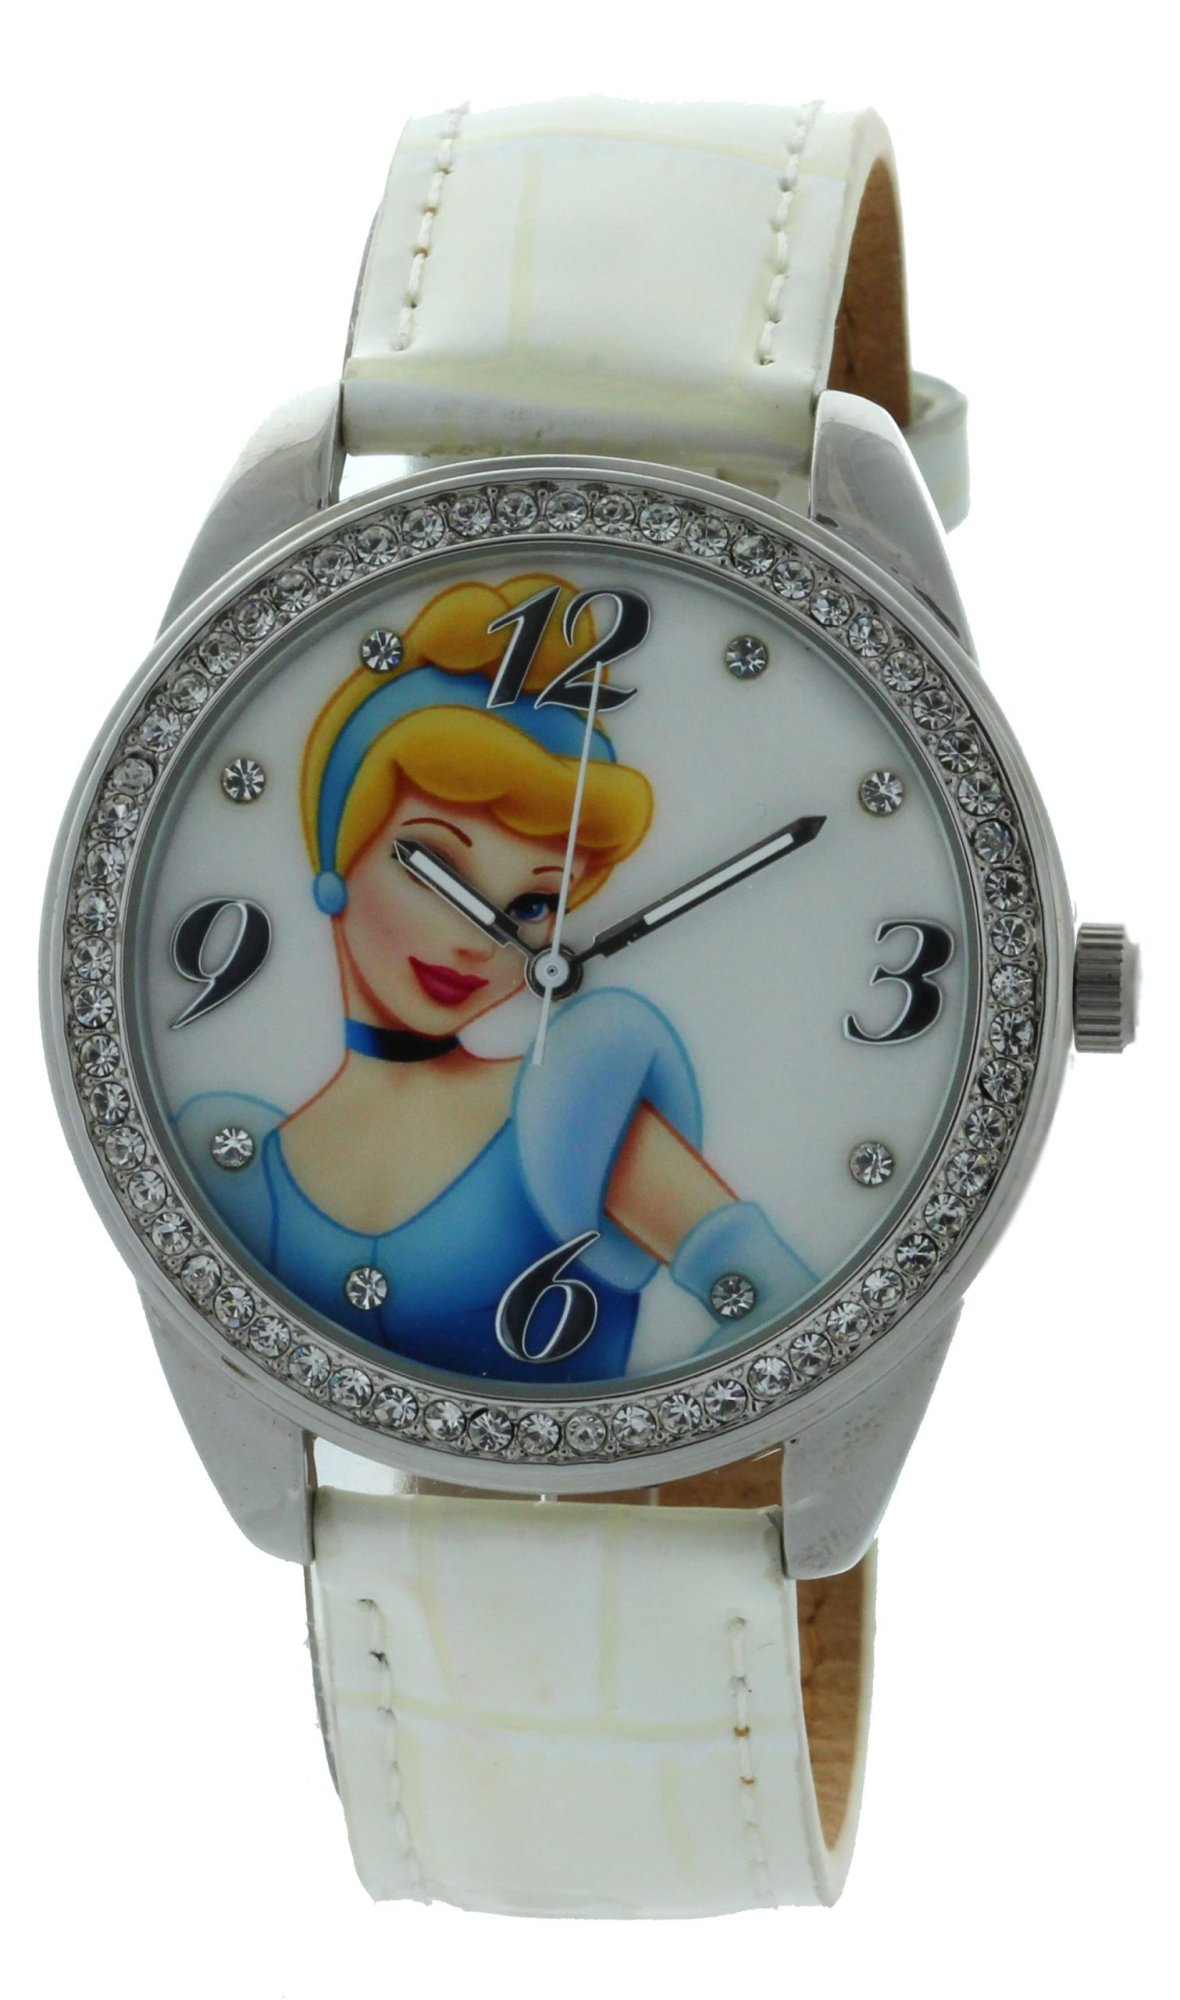 Model: Girls Disney Princess Quartz Fashion Watch with White Leather Strap